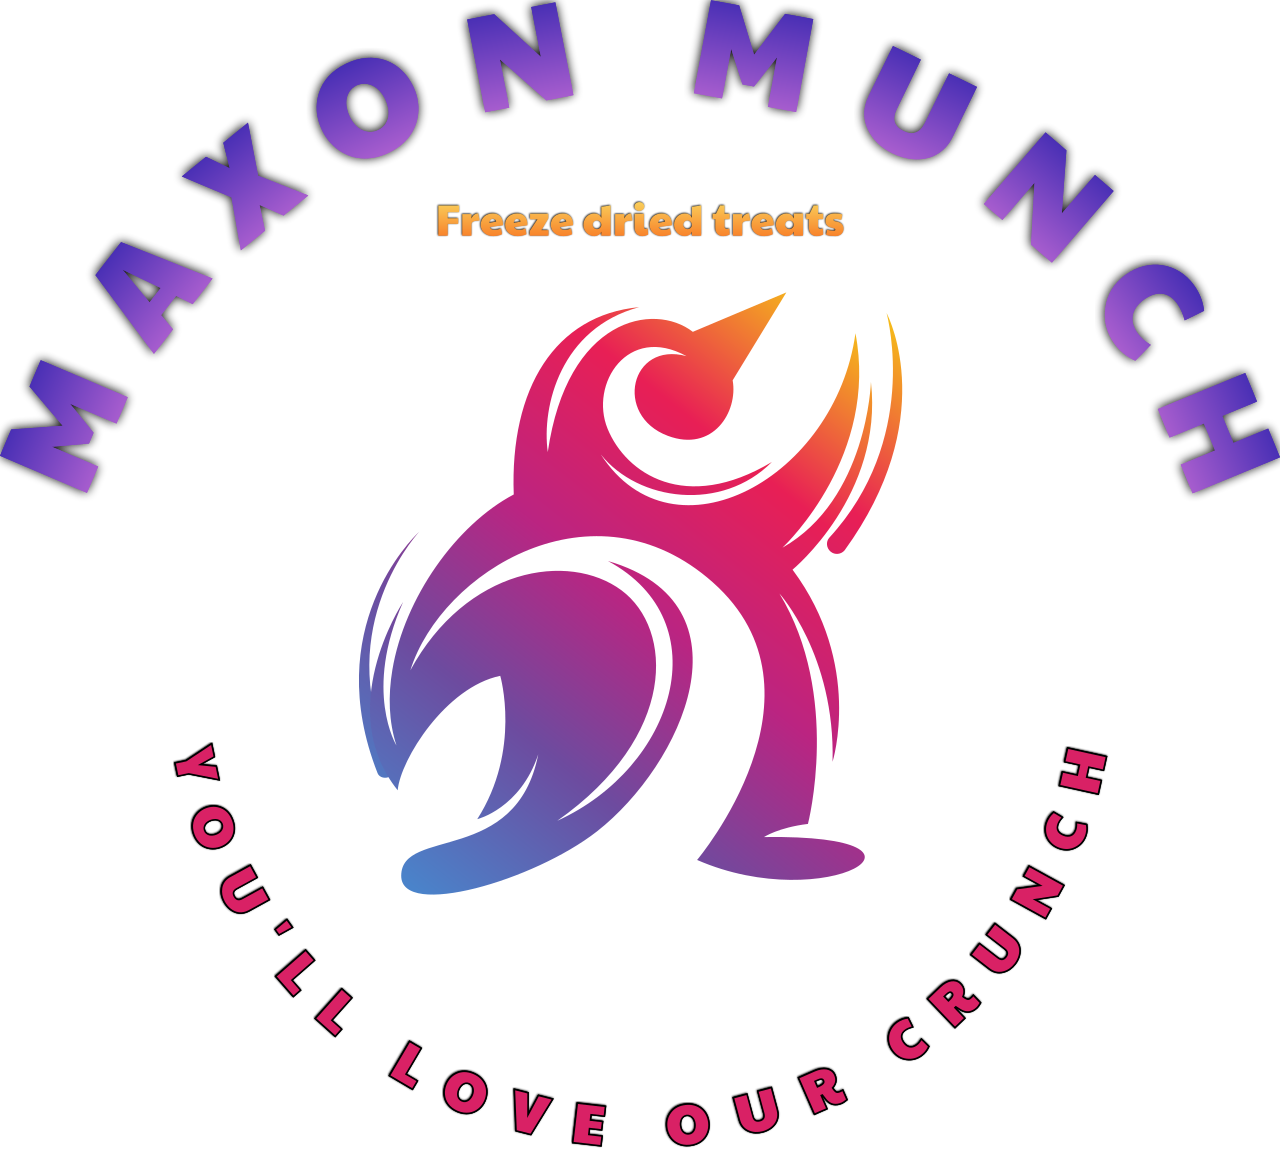 Maxon Munch's web page